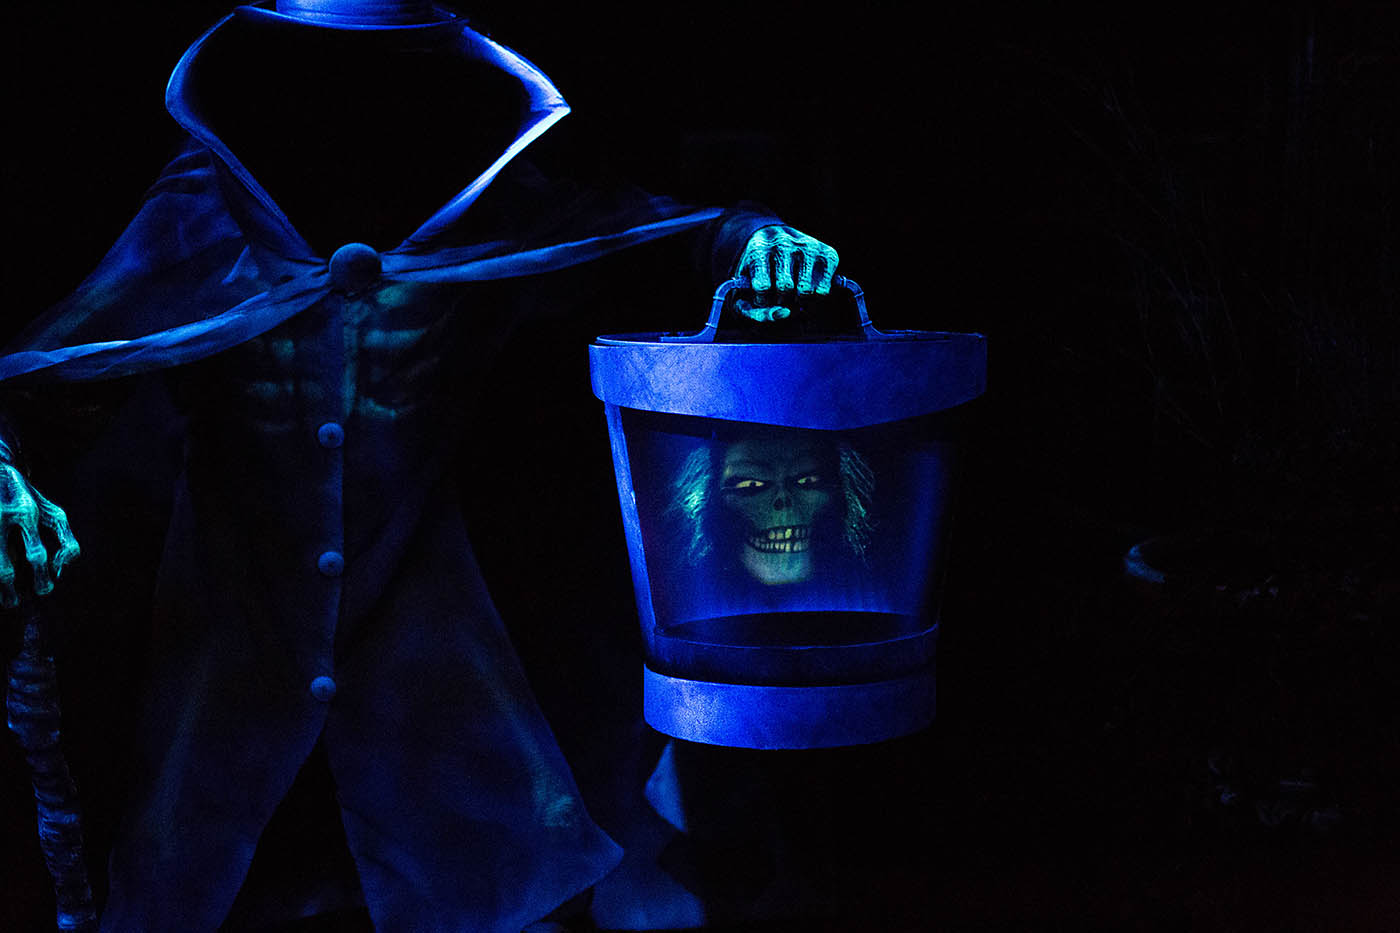 Hatbox Ghost at Disneyland